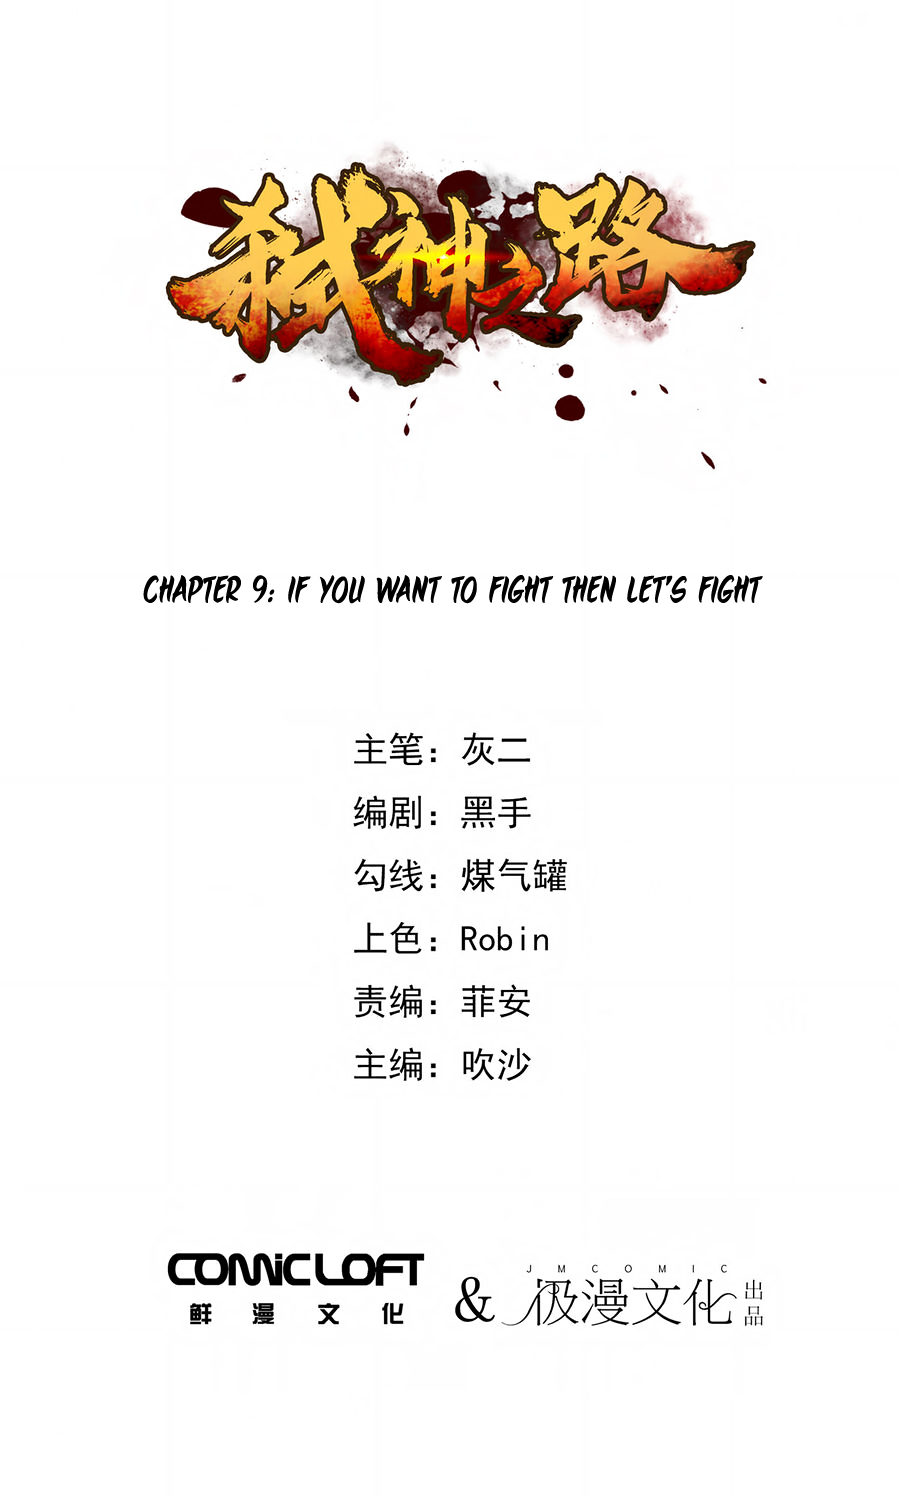 Shi Shen Zhi Lu Ch. 9 If You Want to Fight then Let’s Fight